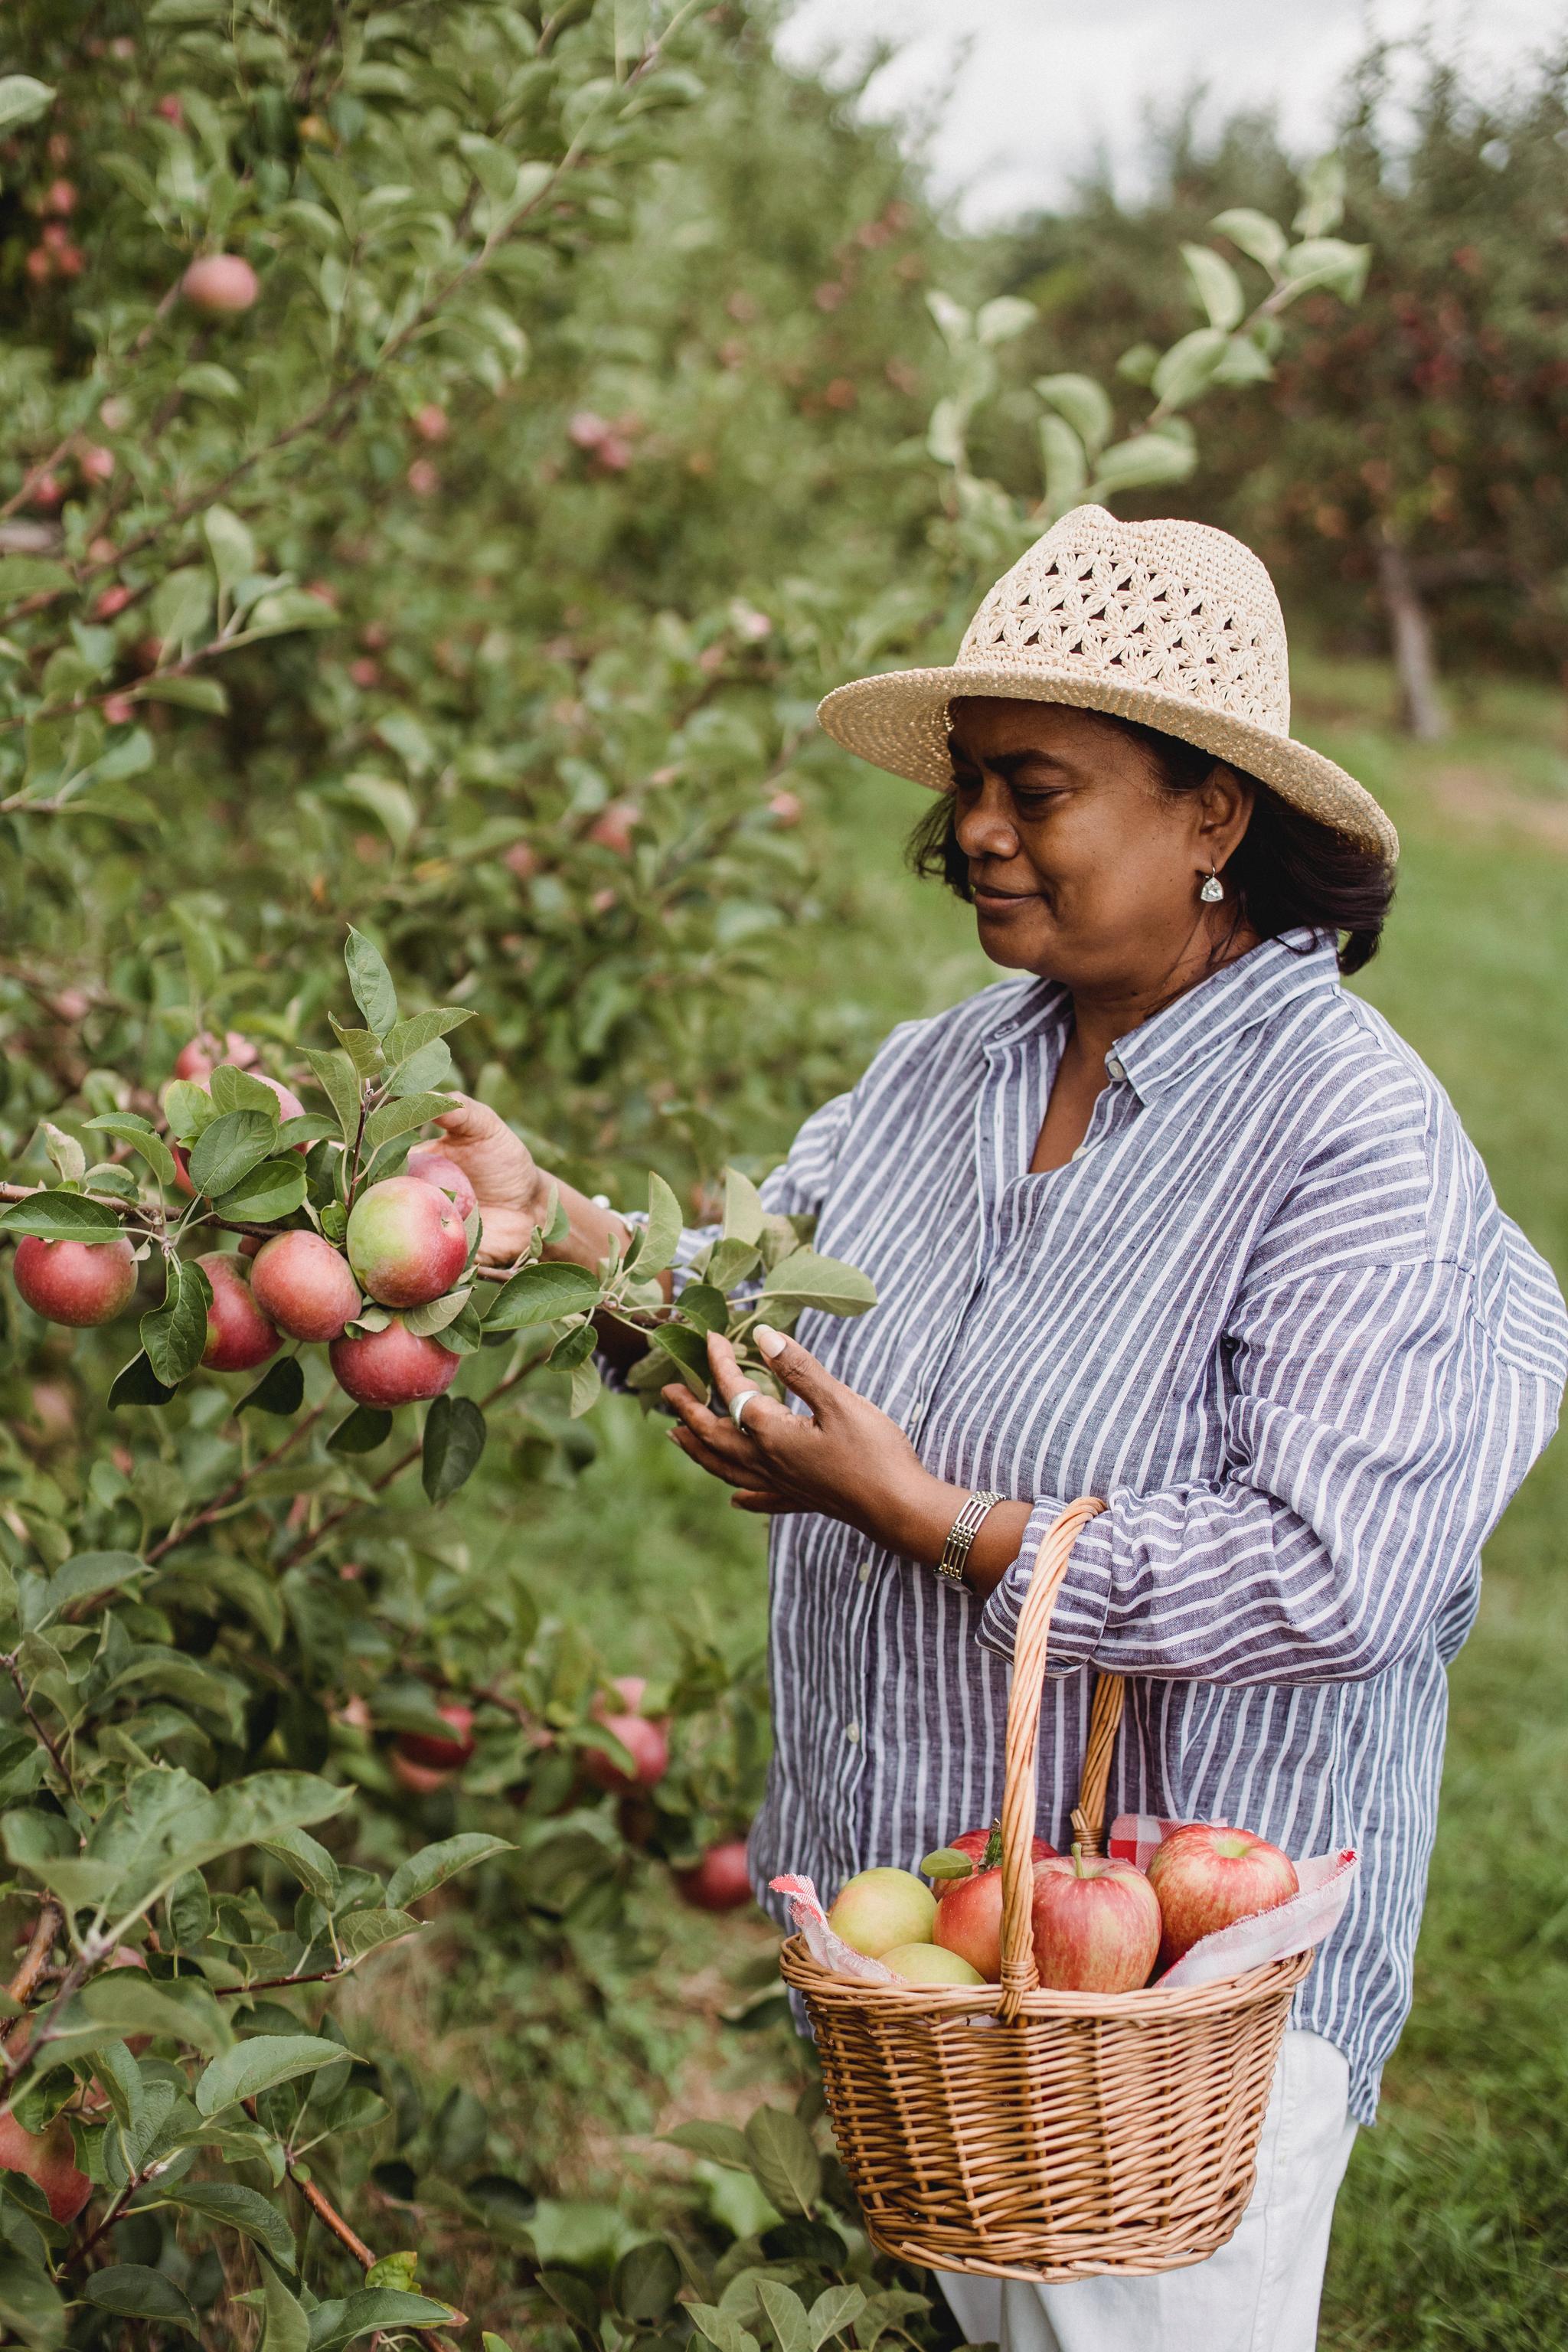 A woman in an elegant sunhat picks a basket of apples